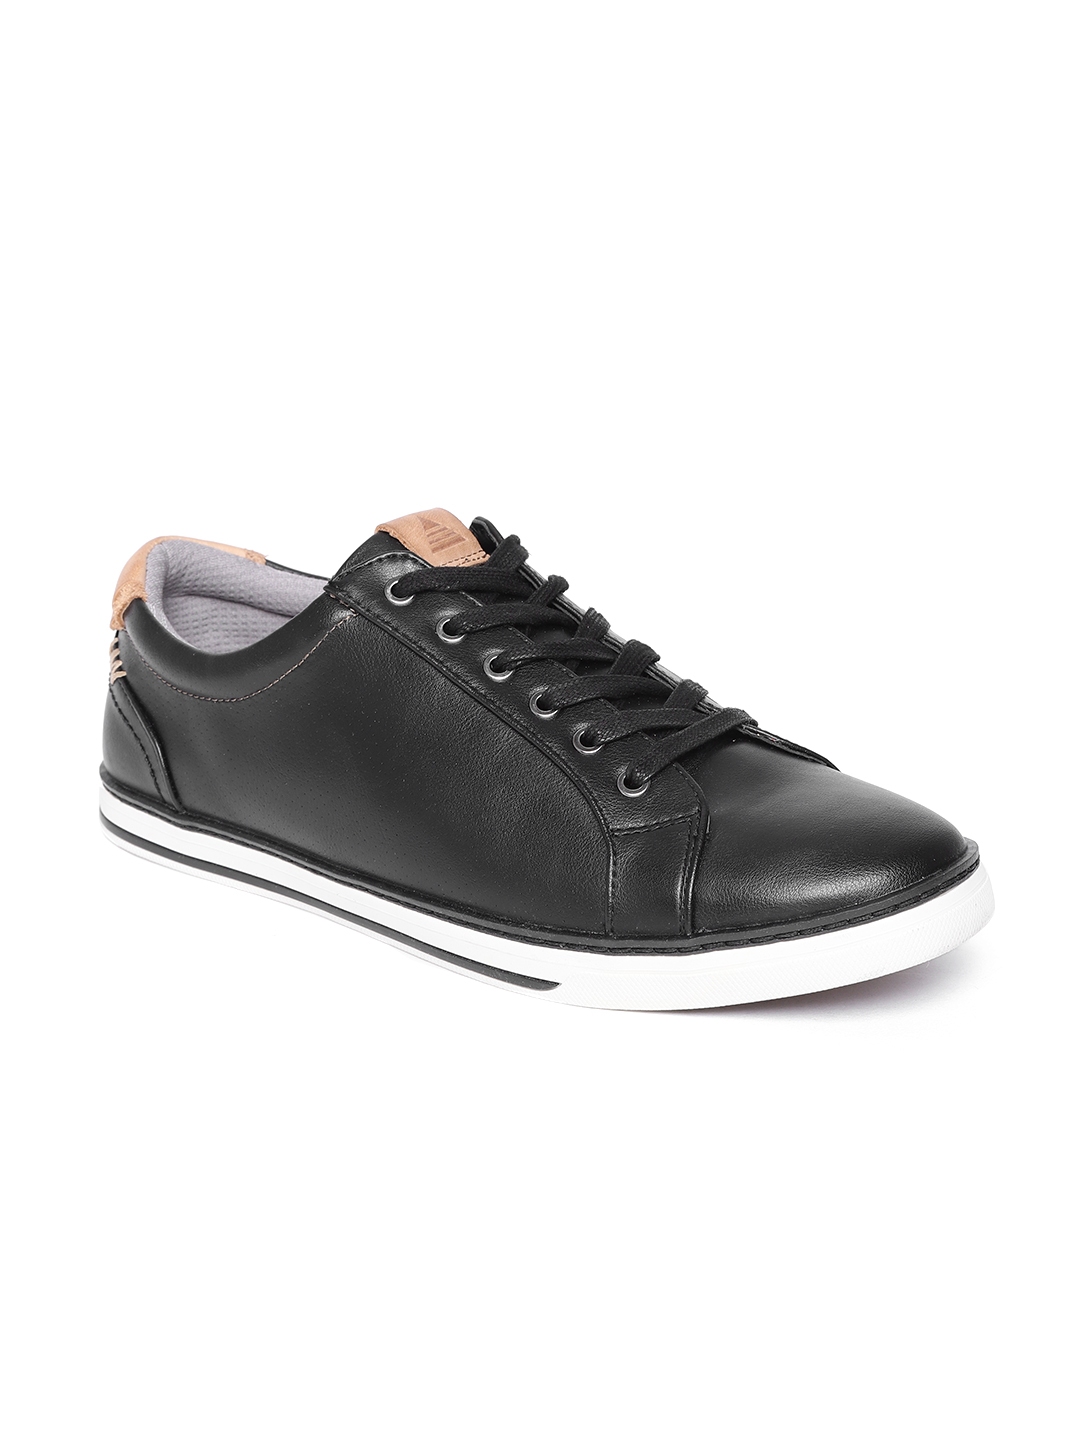 Buy ALDO Men Black Sneakers Casual Shoes for Men 7373931